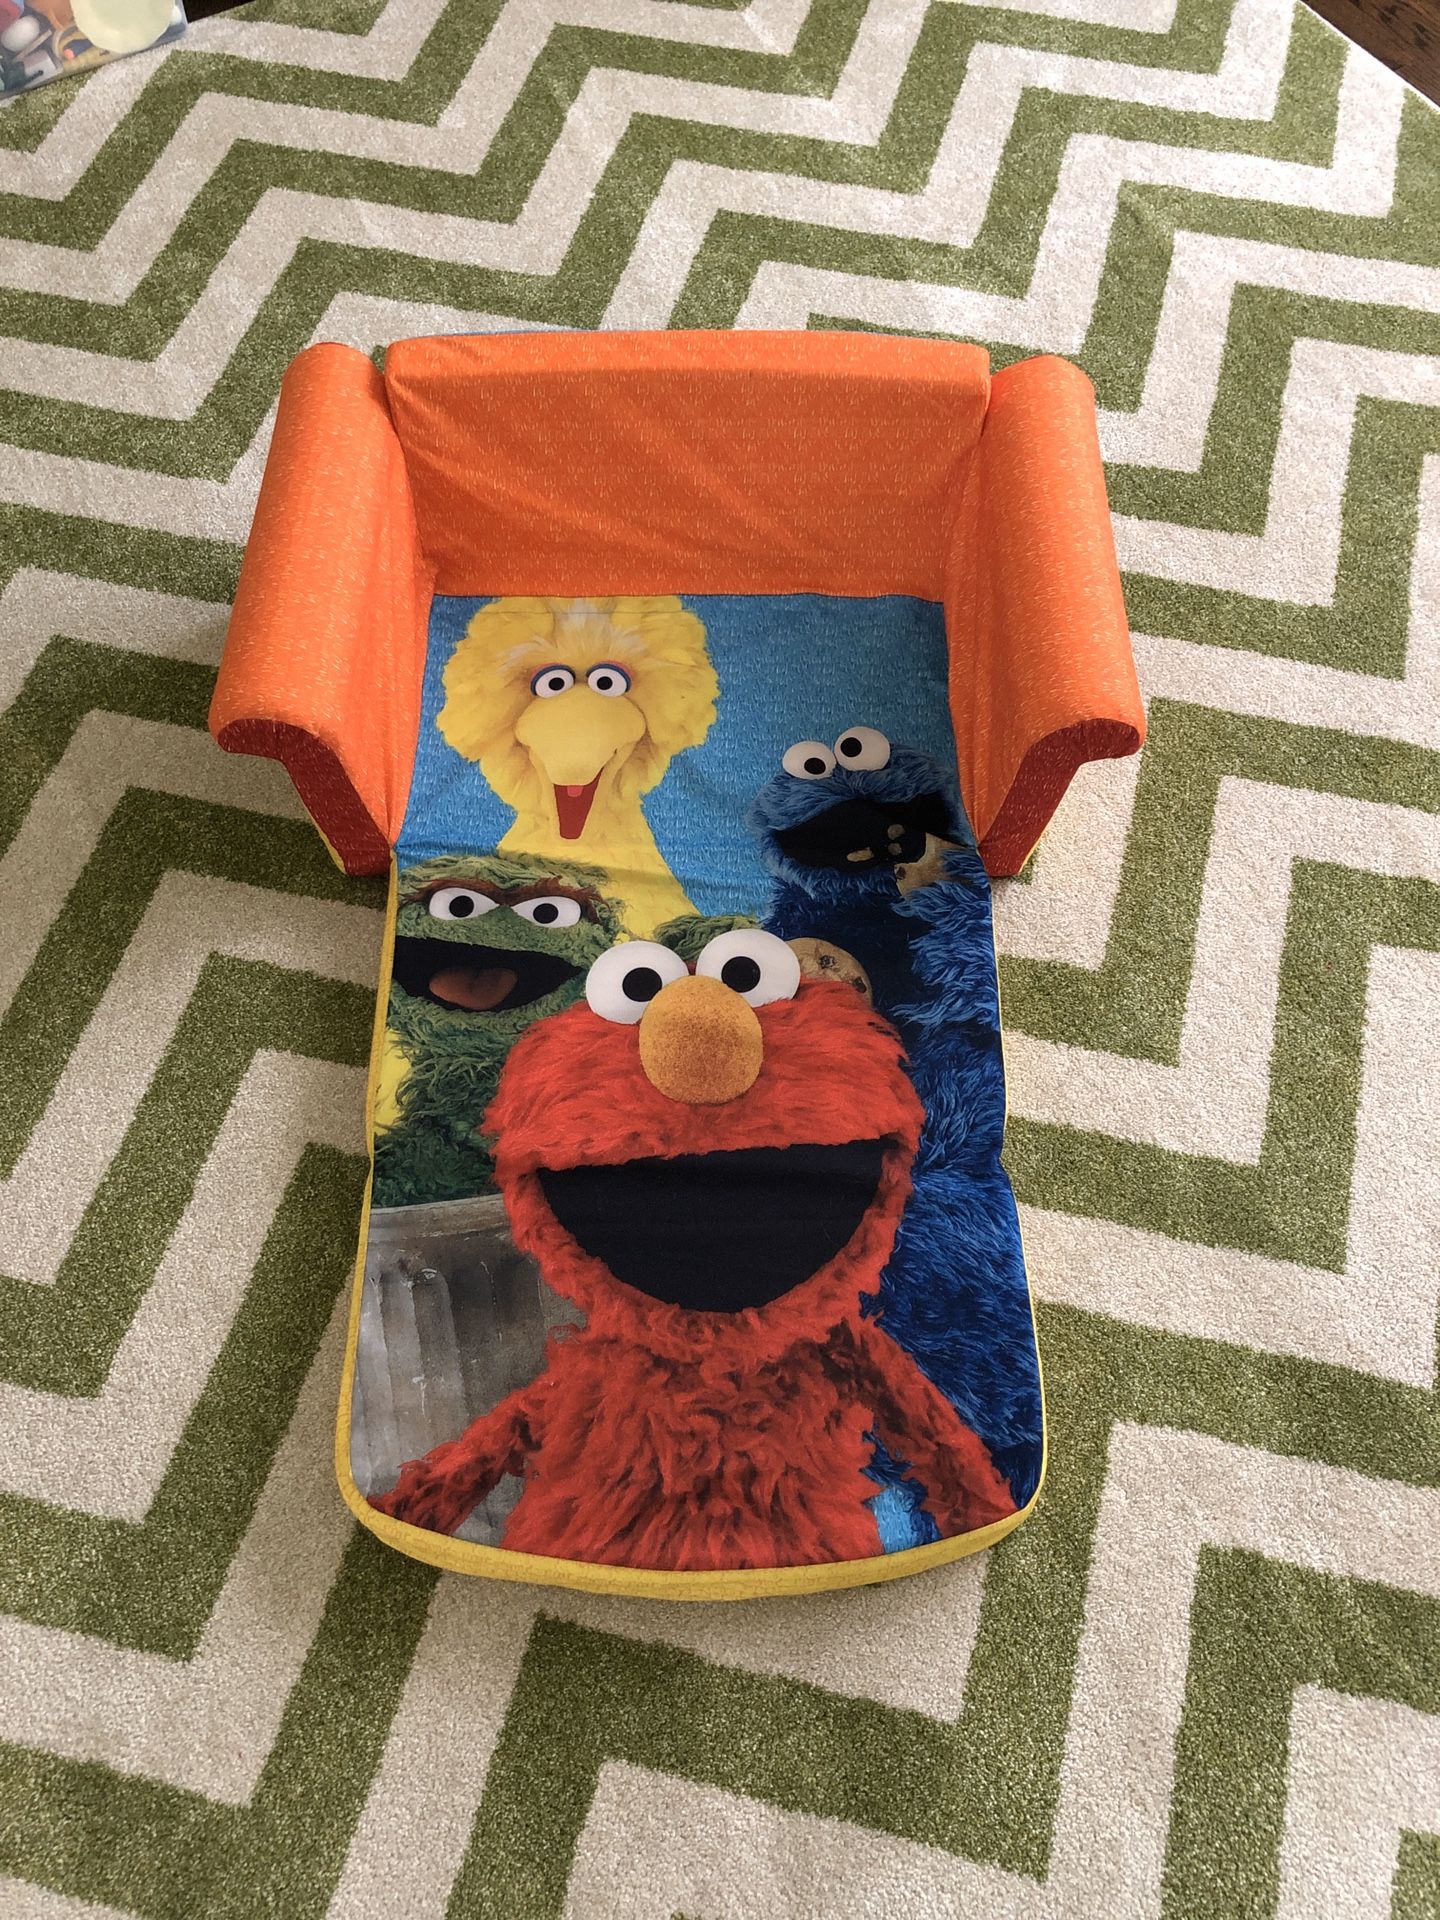 Elmo Sesame Street kids / toddler chair bed